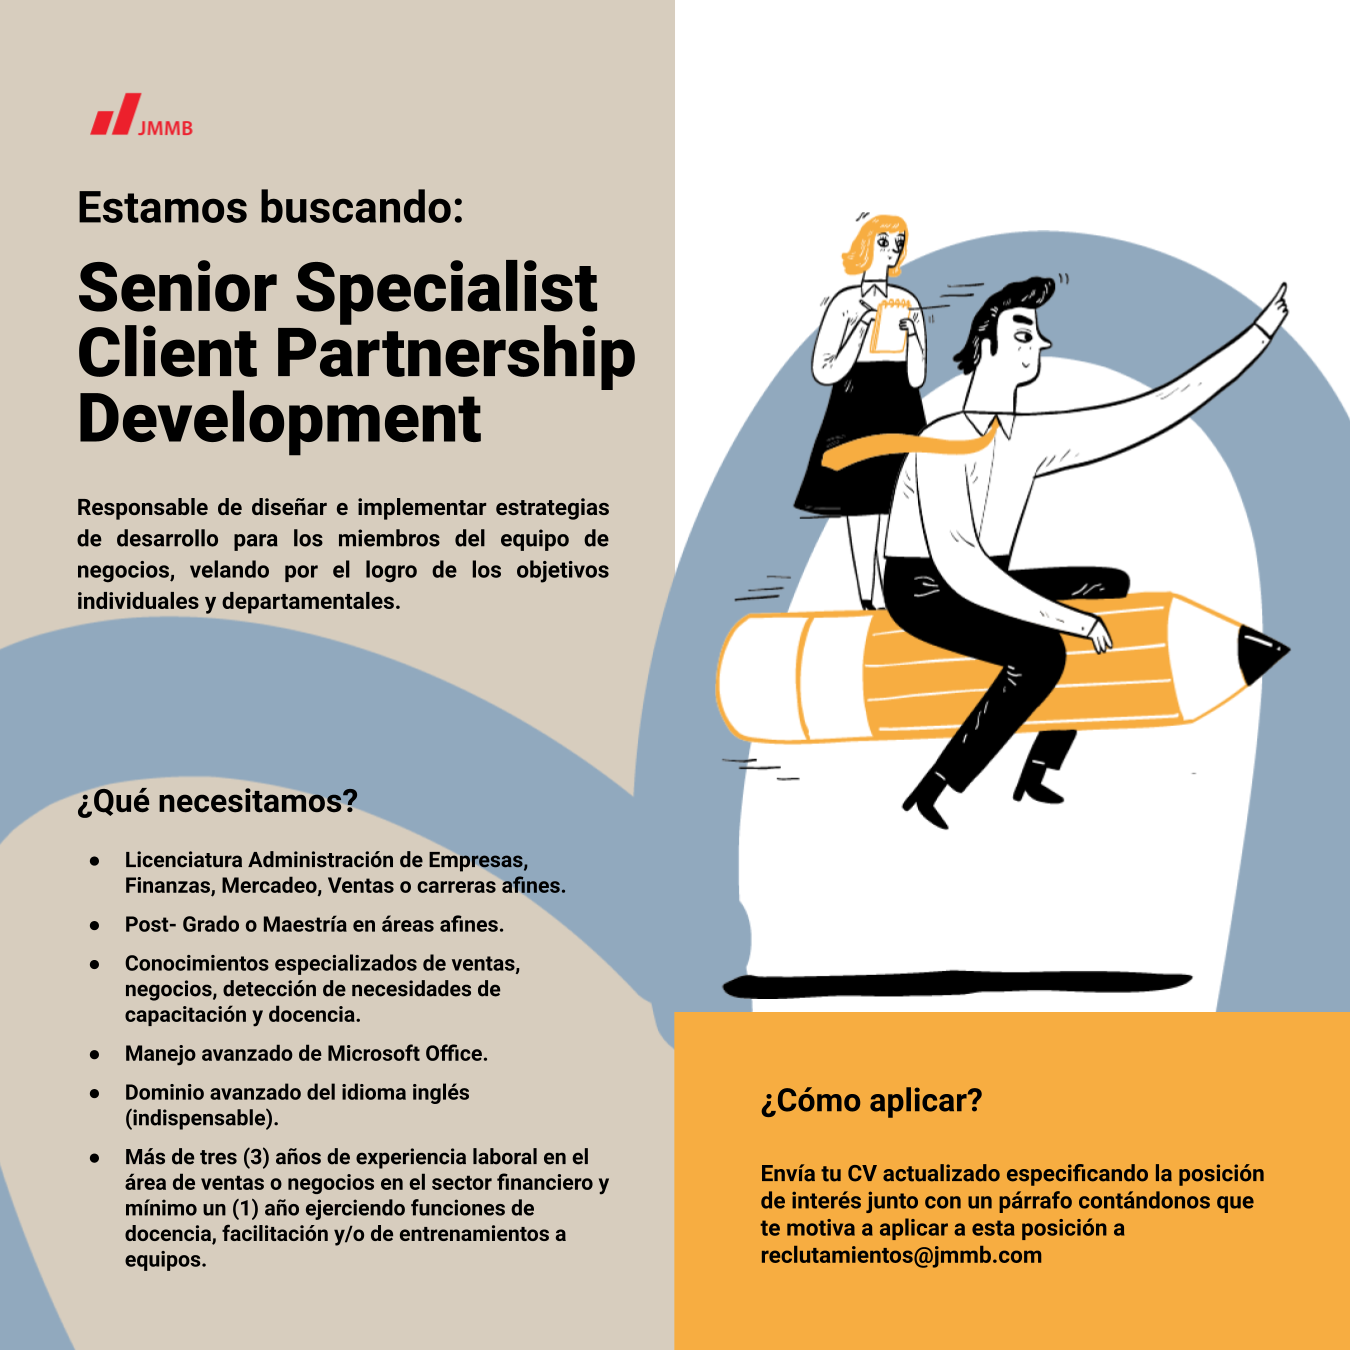 Senior specialist client partnership development